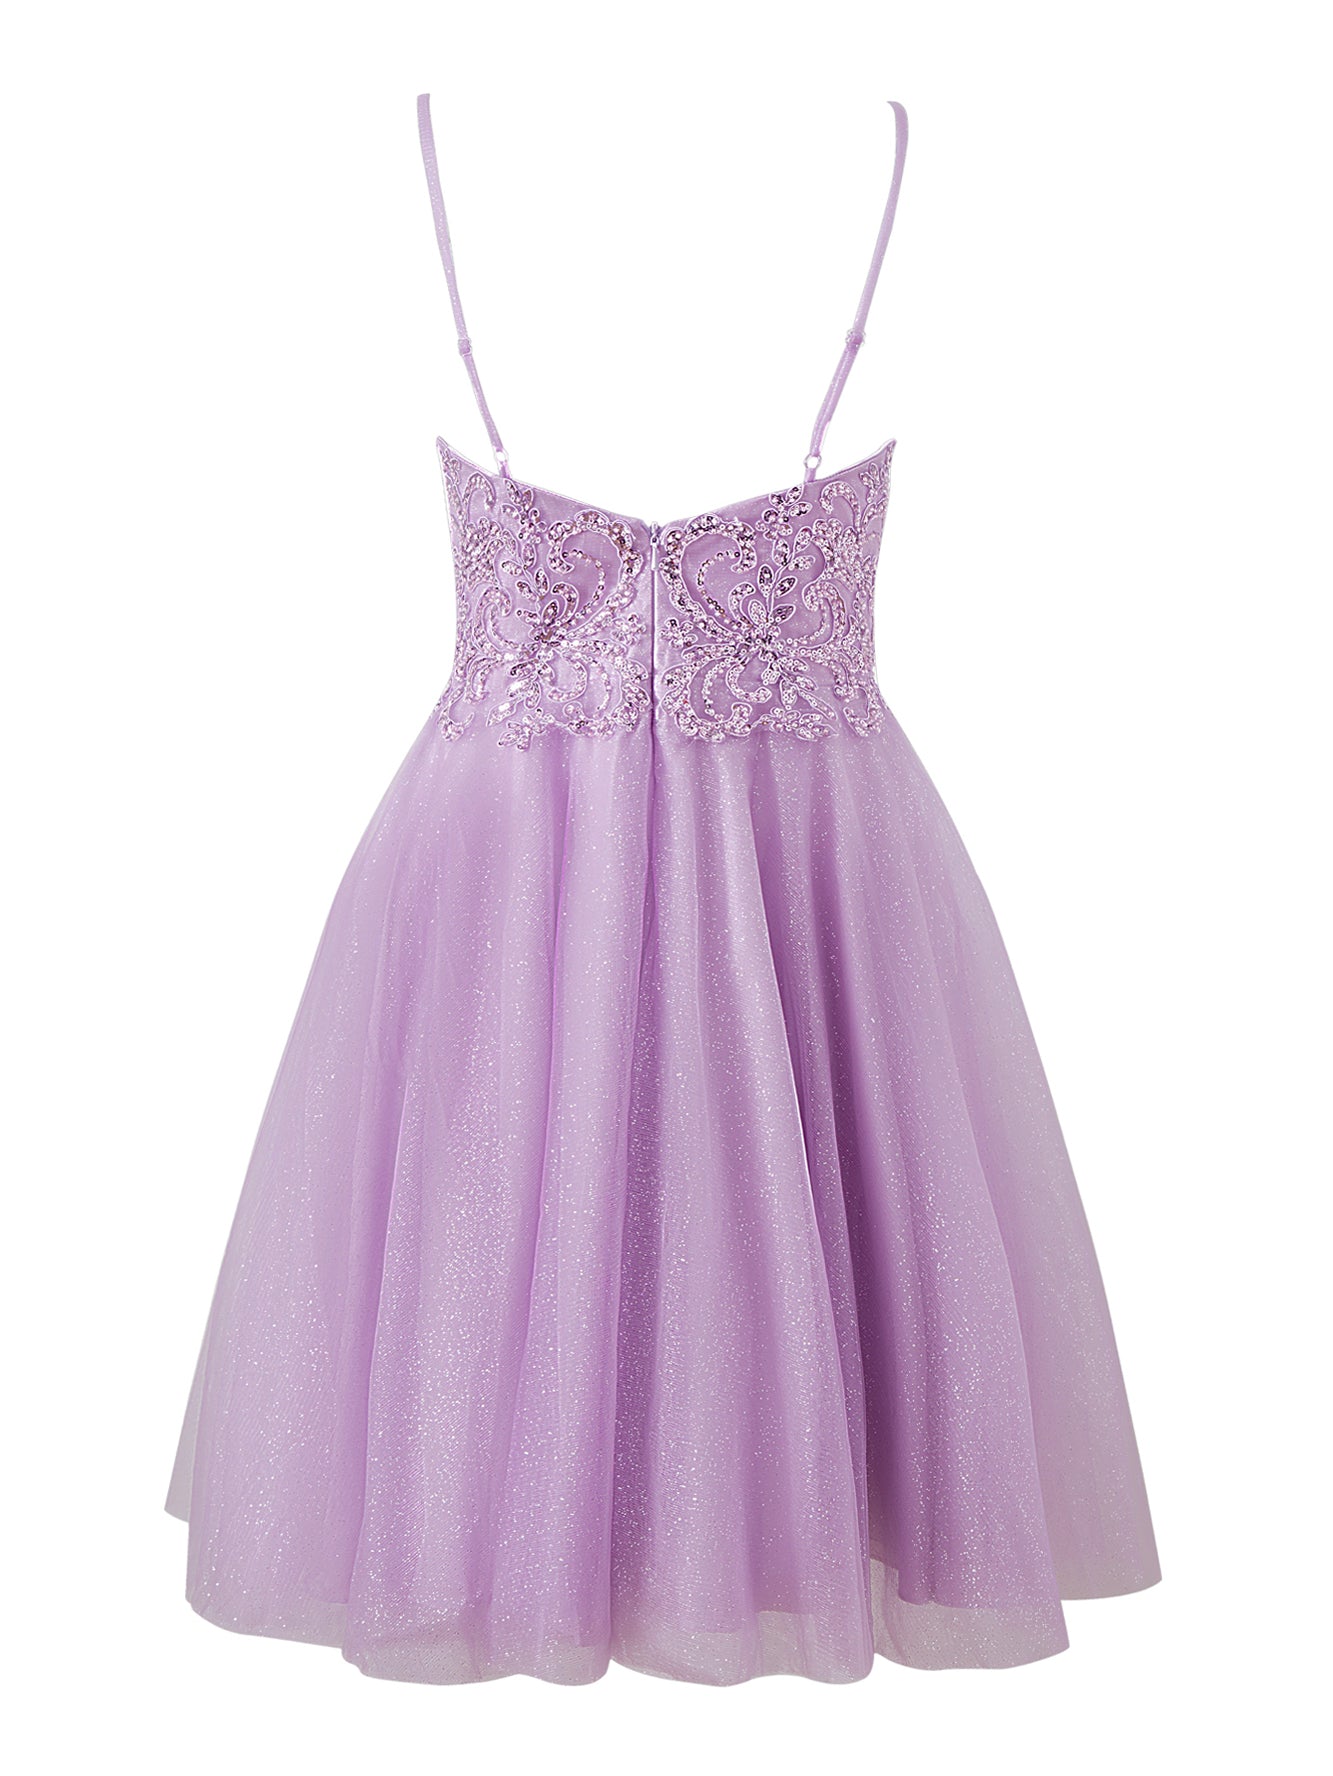 Mya |A line Short Spaghetti Strap Glitter Tulle Homecoming Dress